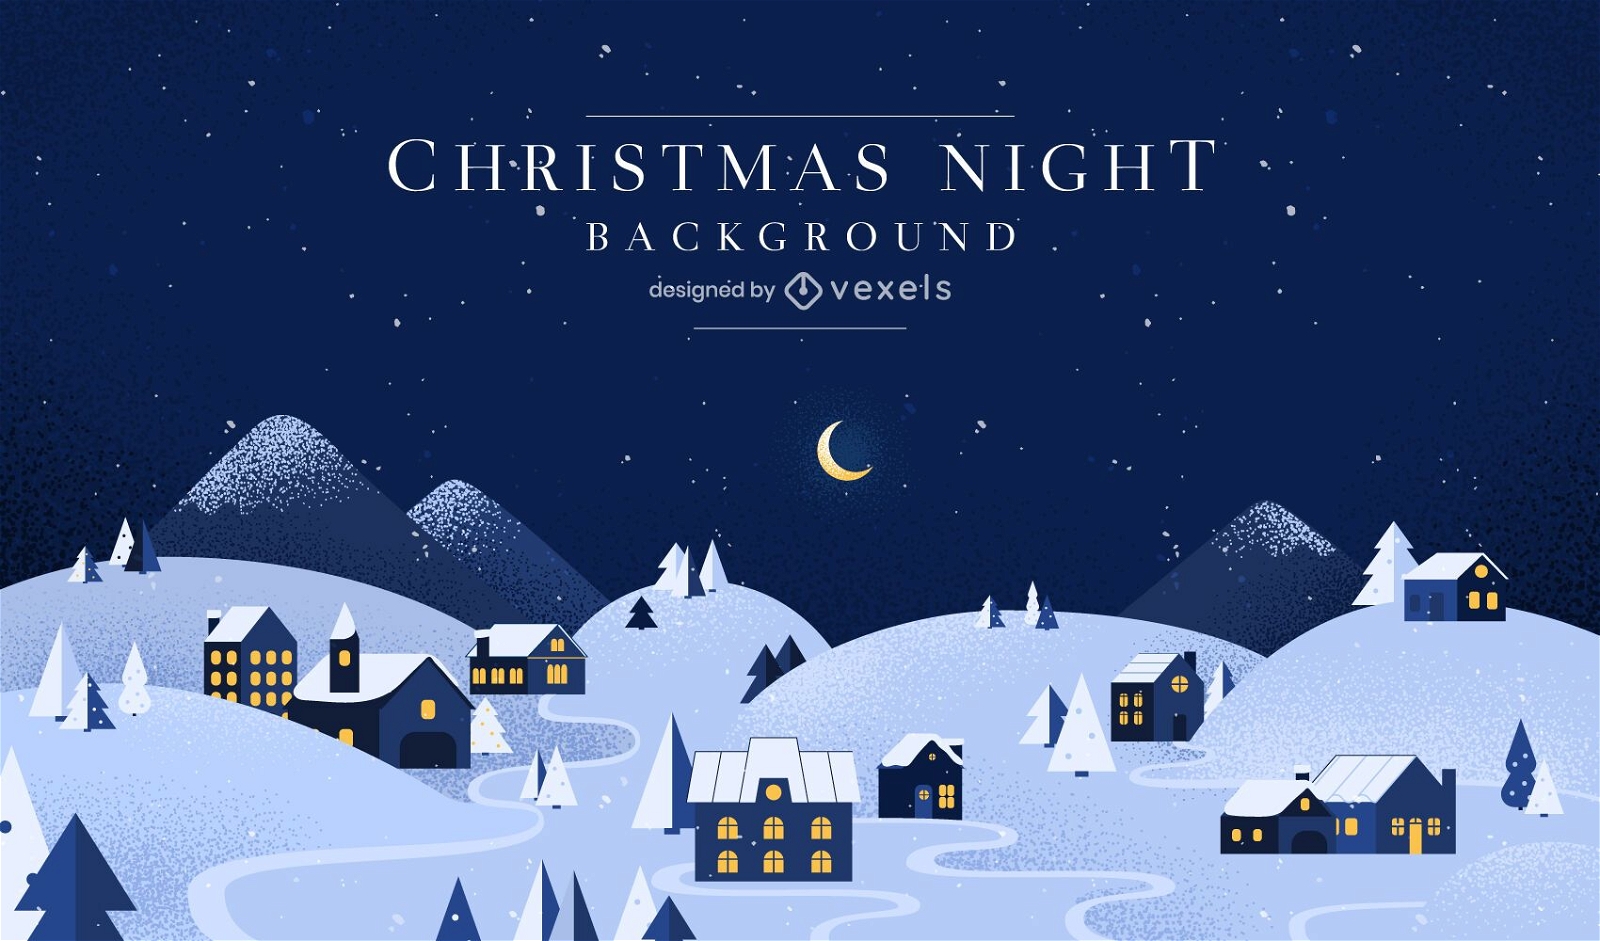 Christmas night background design